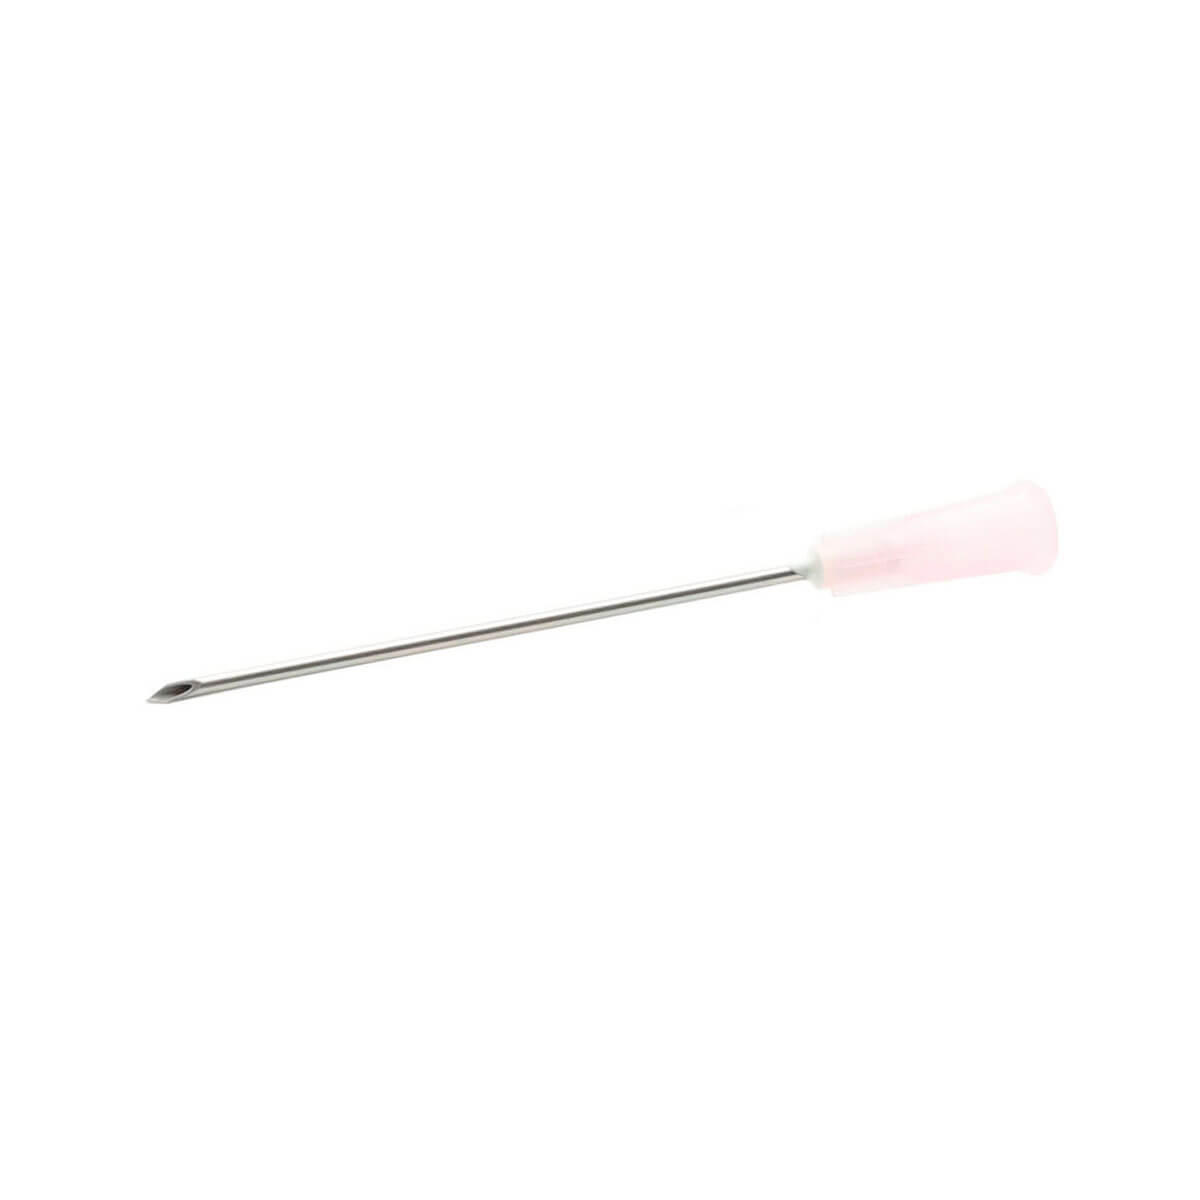 BD Microlance Needle Pink 18G 40MM